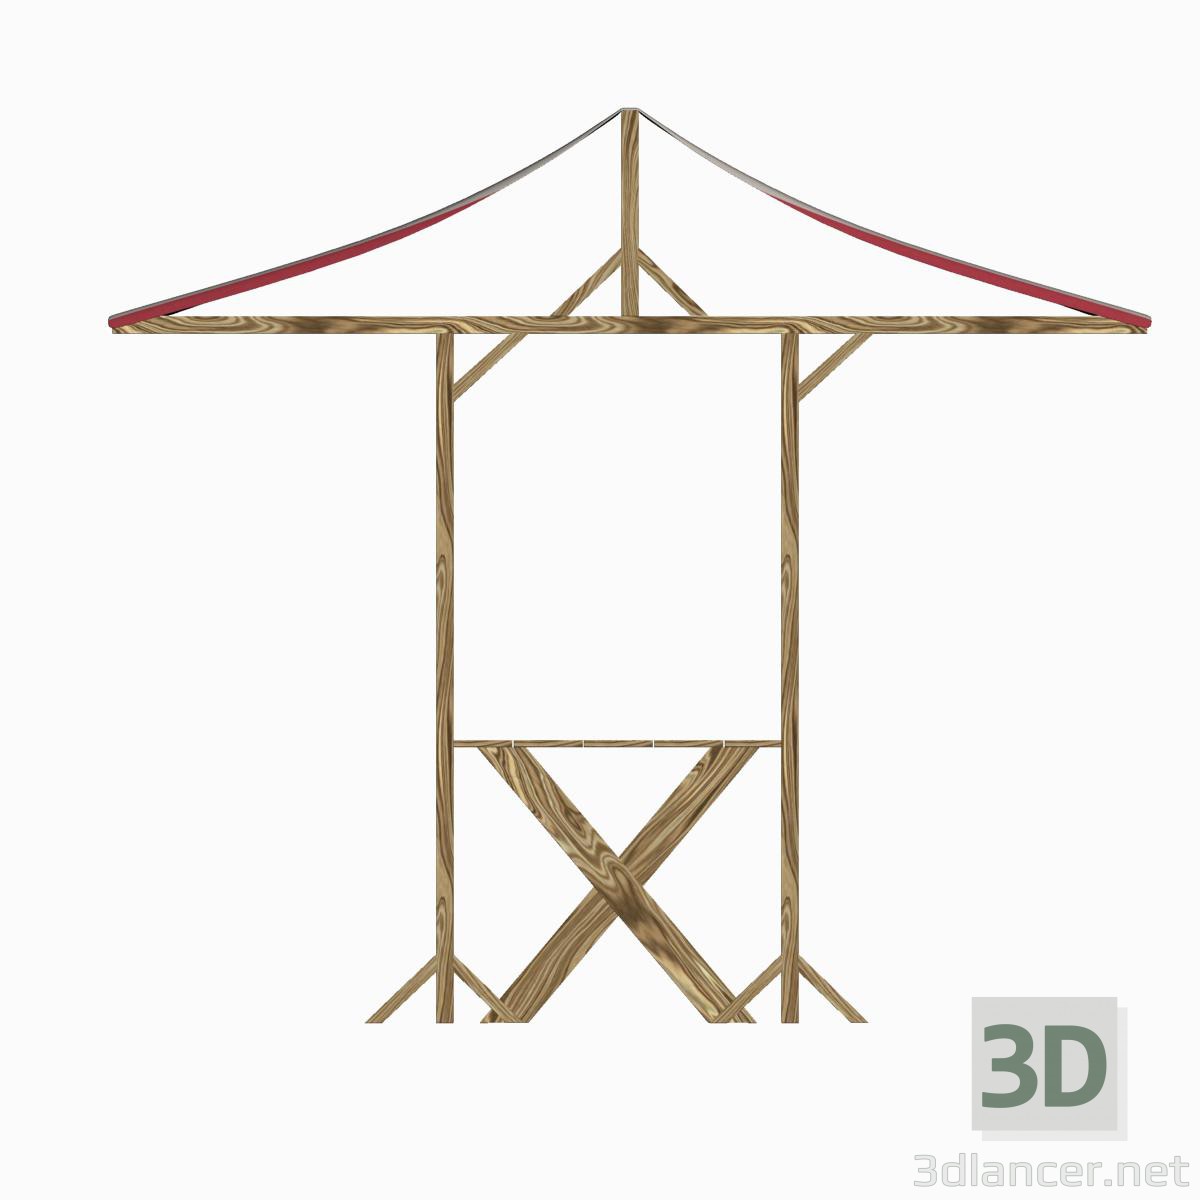 3d Trade tents model buy - render